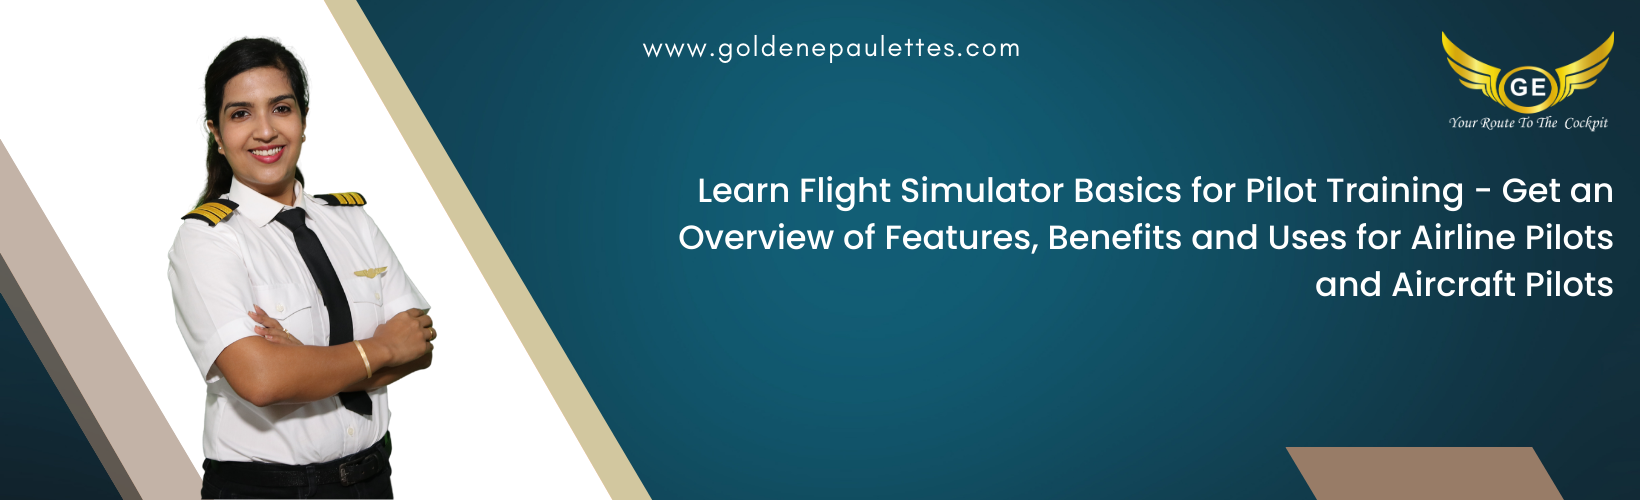 Flight Simulator Basics